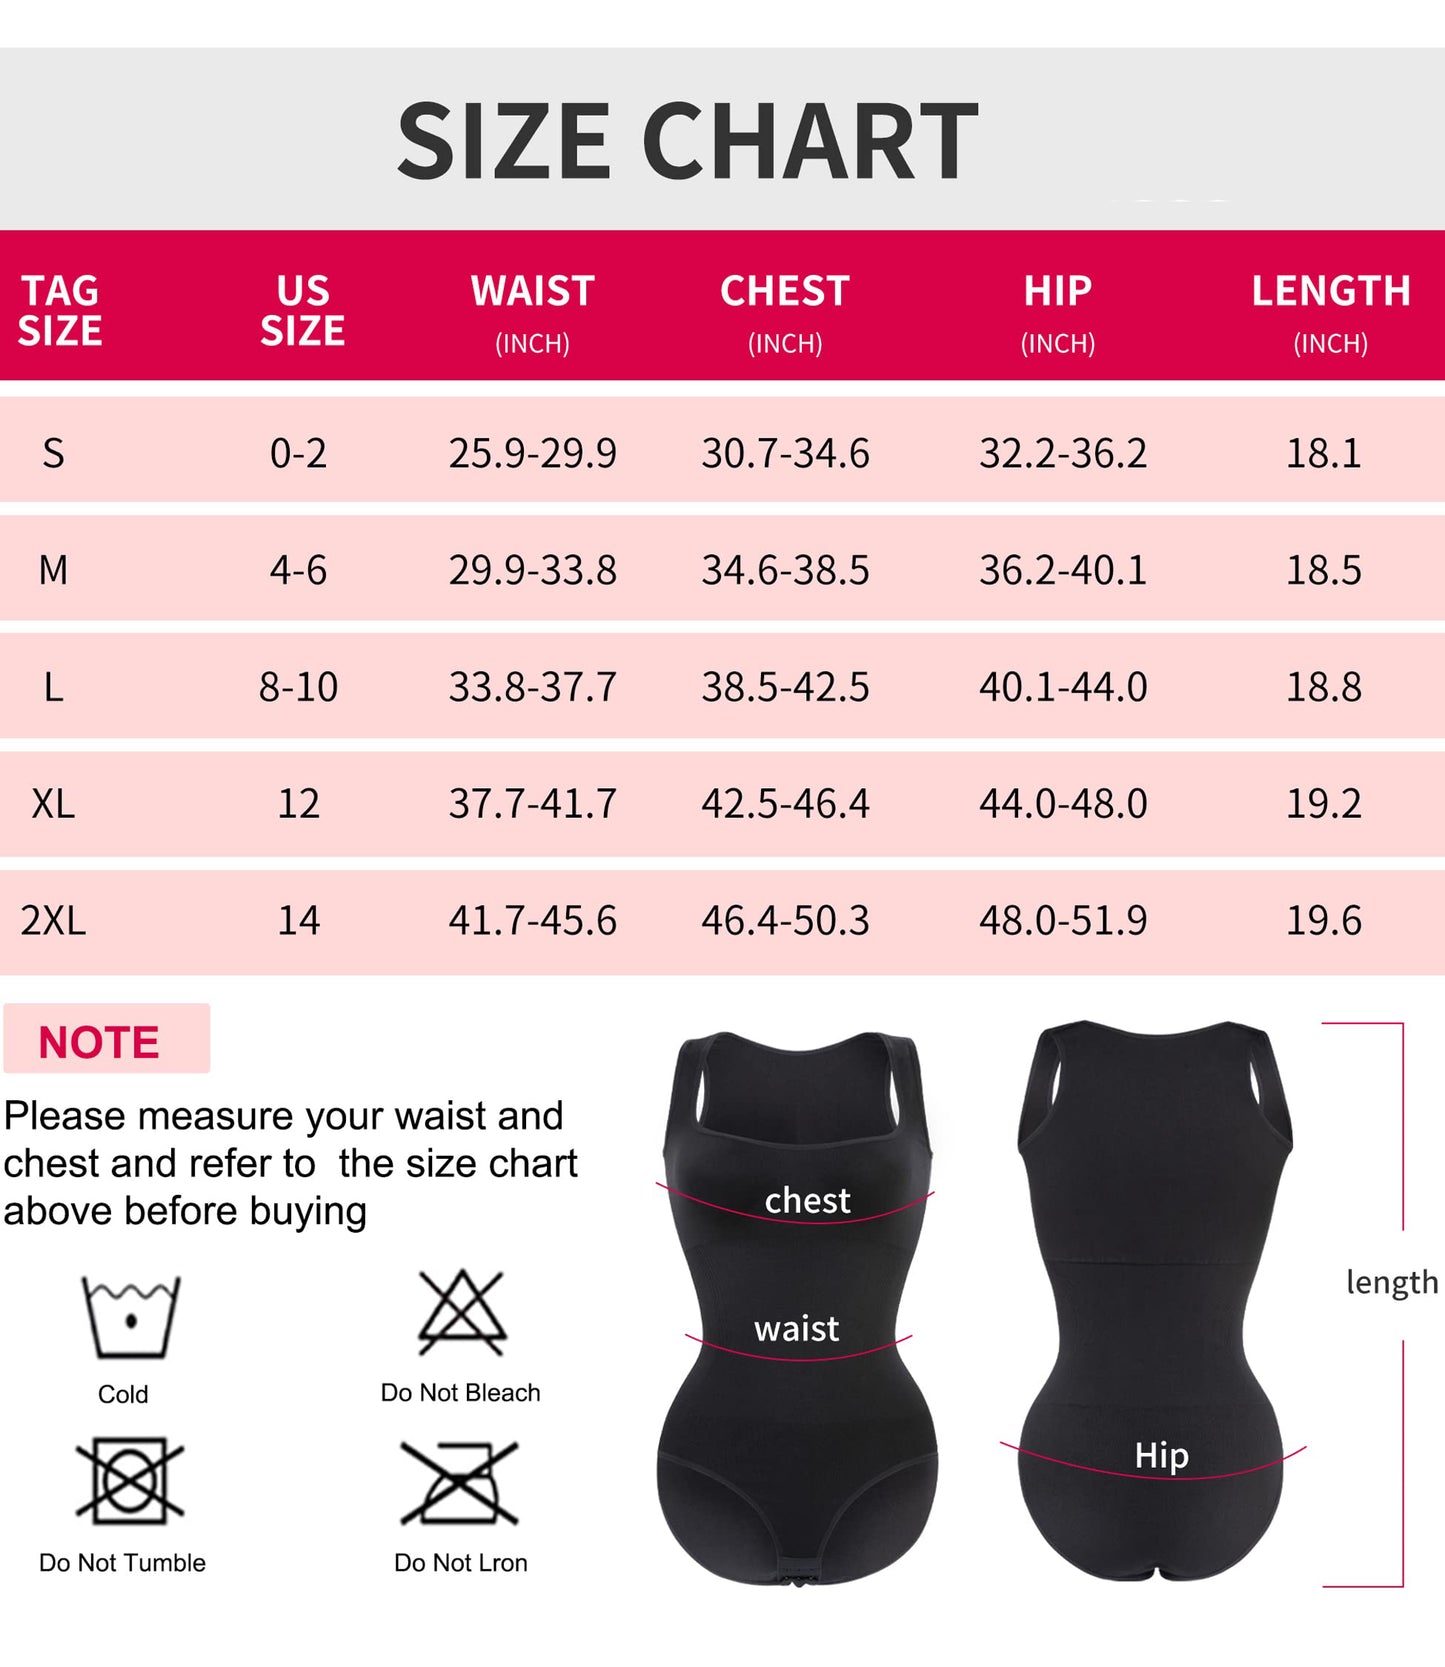 Nebility Bodysuit for Women Seamless Tummy Control Shapewear Sleeveless Square Neck Tank Tops Slimming Body Shaper Butt Lifter